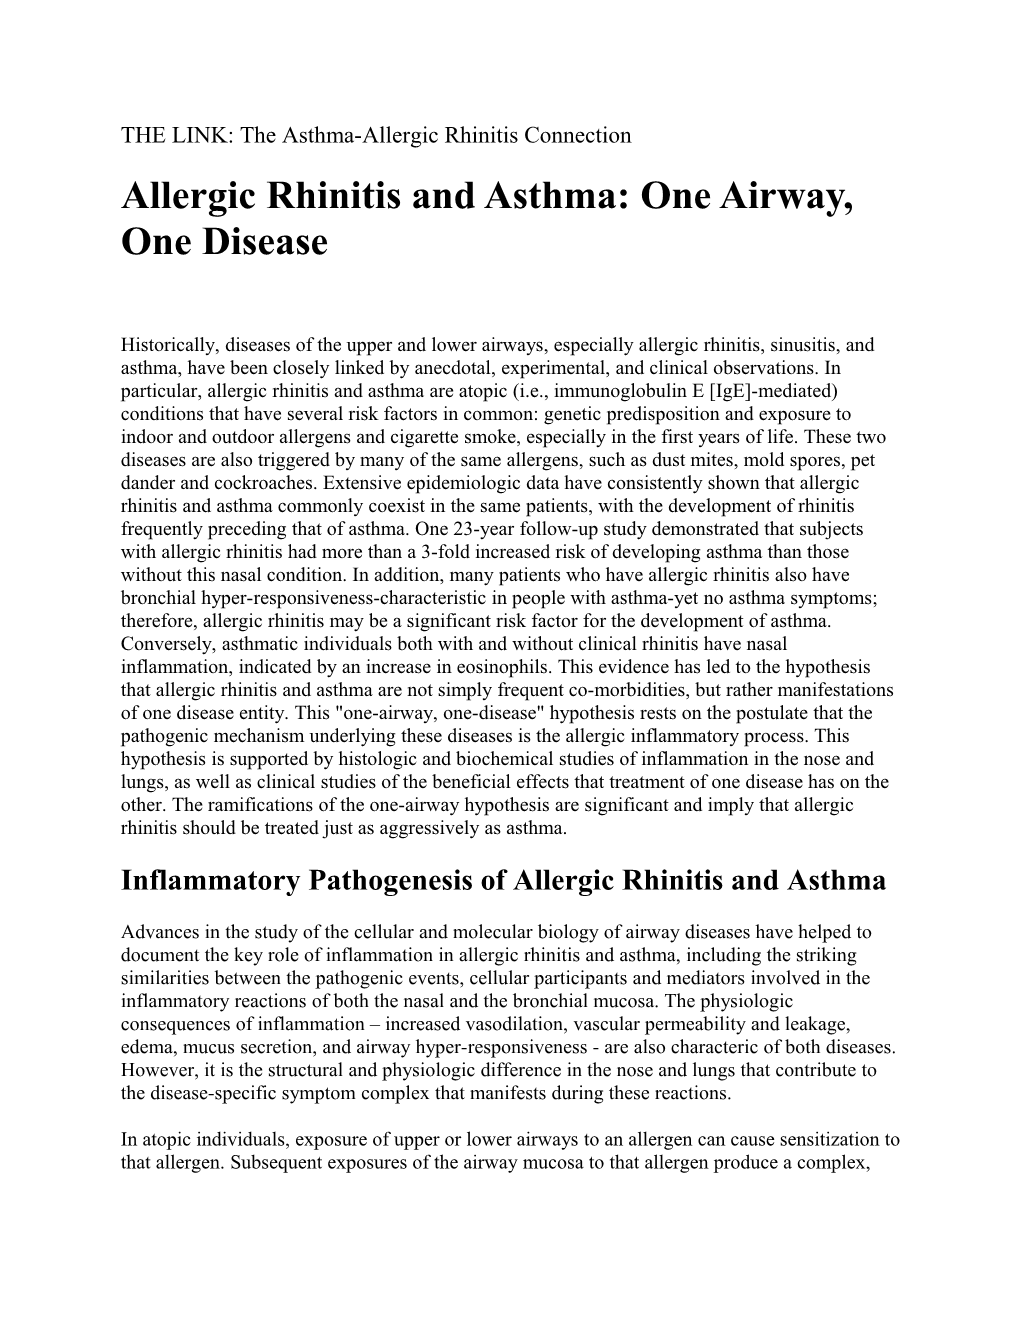 Allergic Rhinitis and Asthma: One Airway, One Disease